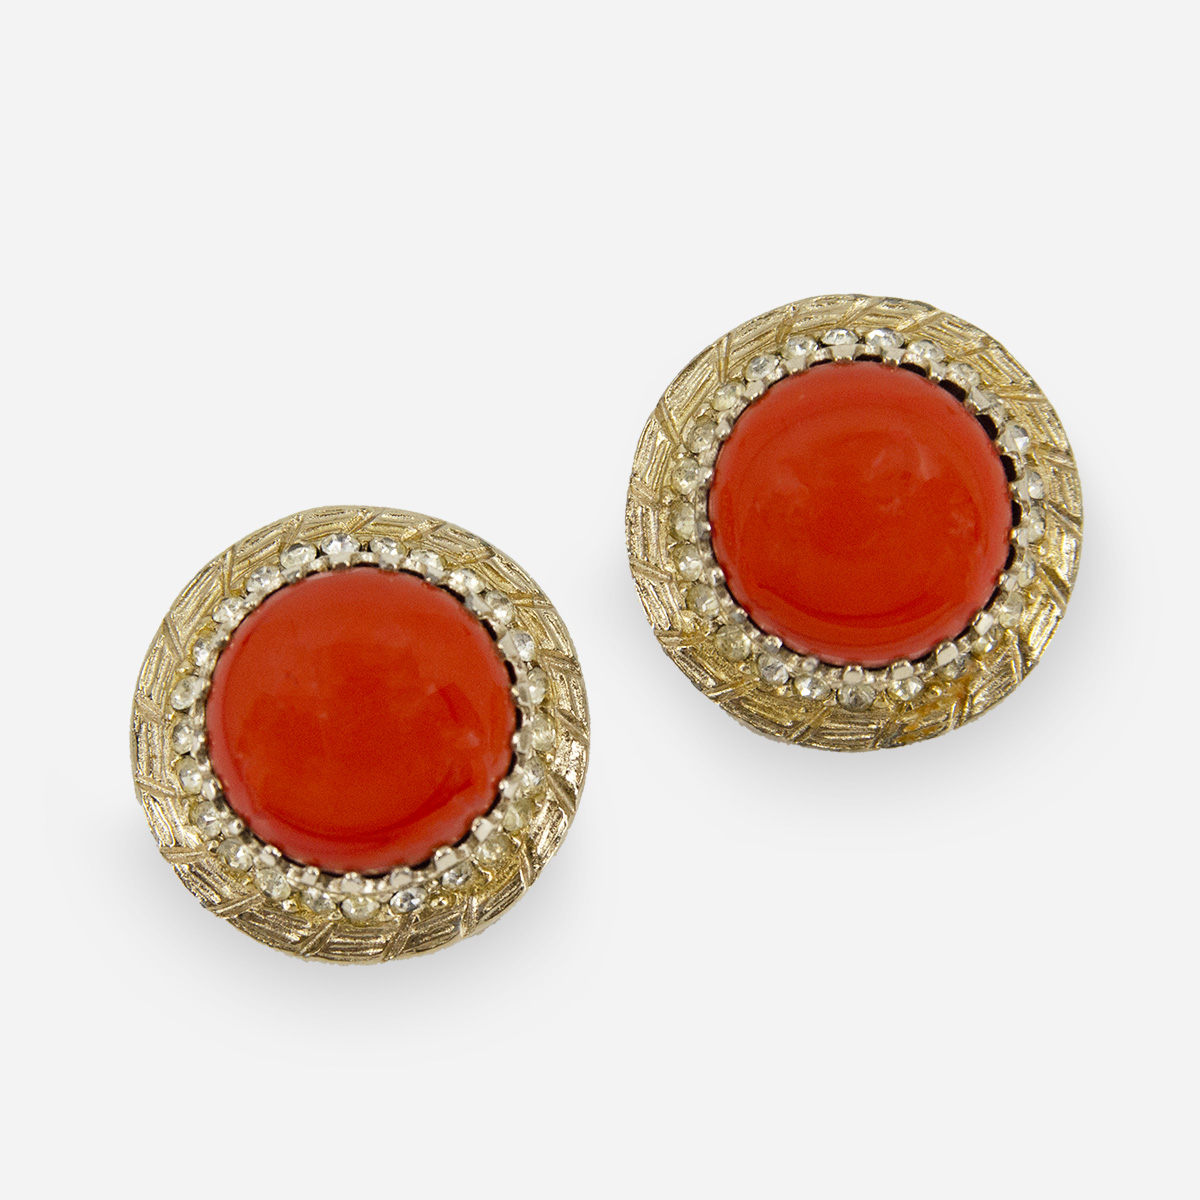 1950s bergere earrings